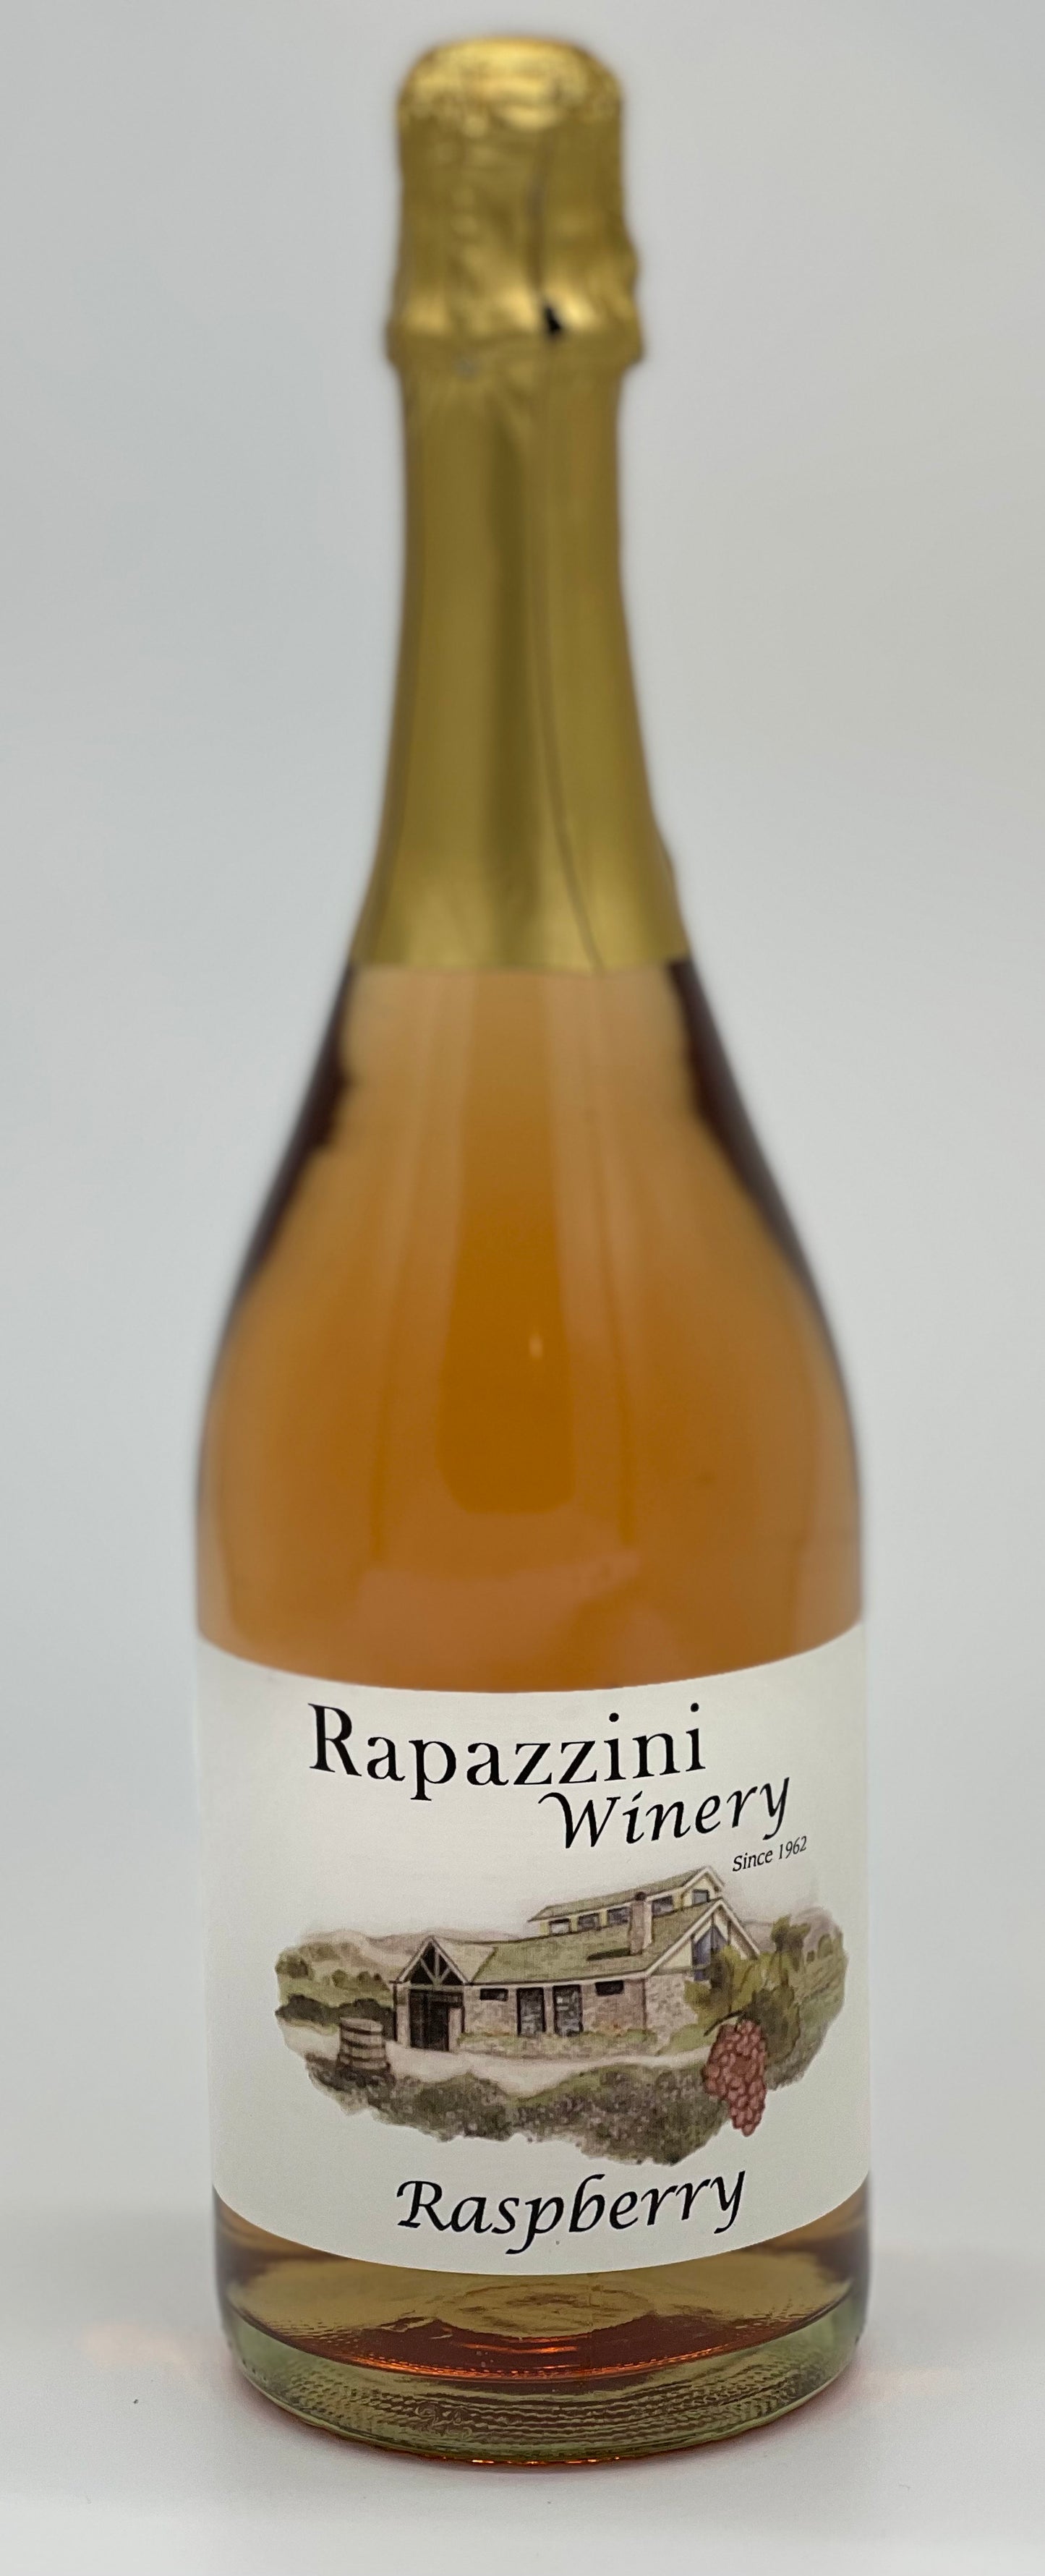 Raspberry Champagne Rapazzini.Wine 750 ml 25 oz 11.5% alcohol $24